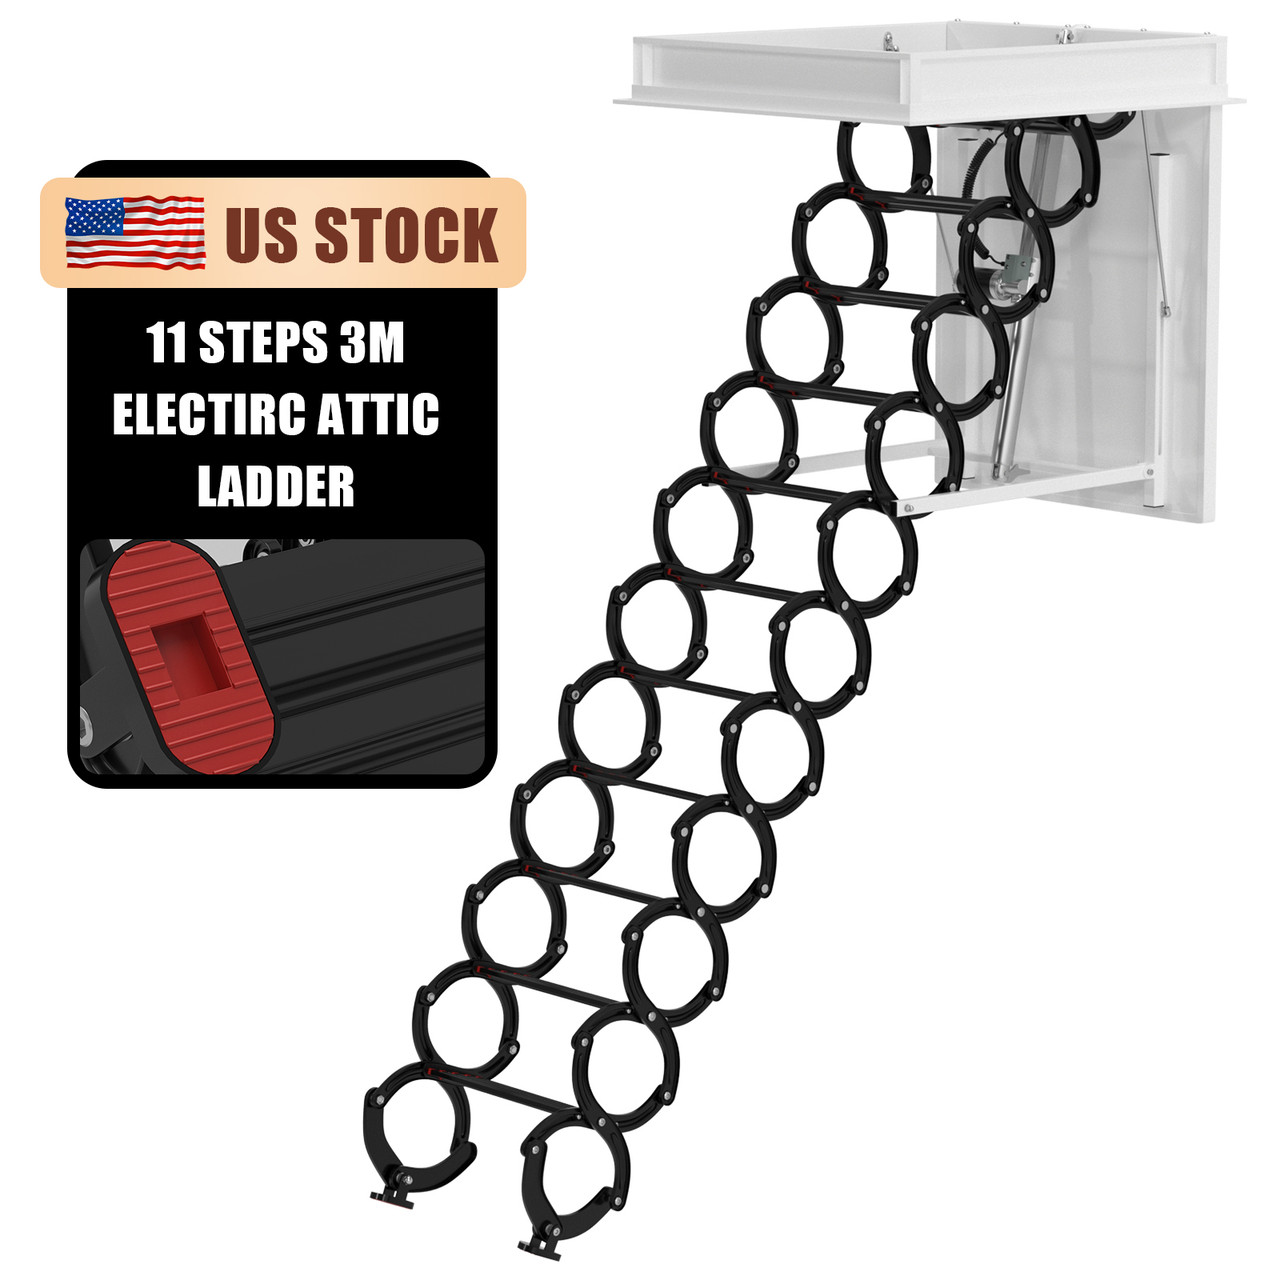 11 Steps 3m Electirc Attic Ladder Aluminum Folding With Remote Loft 31.5*35.4"